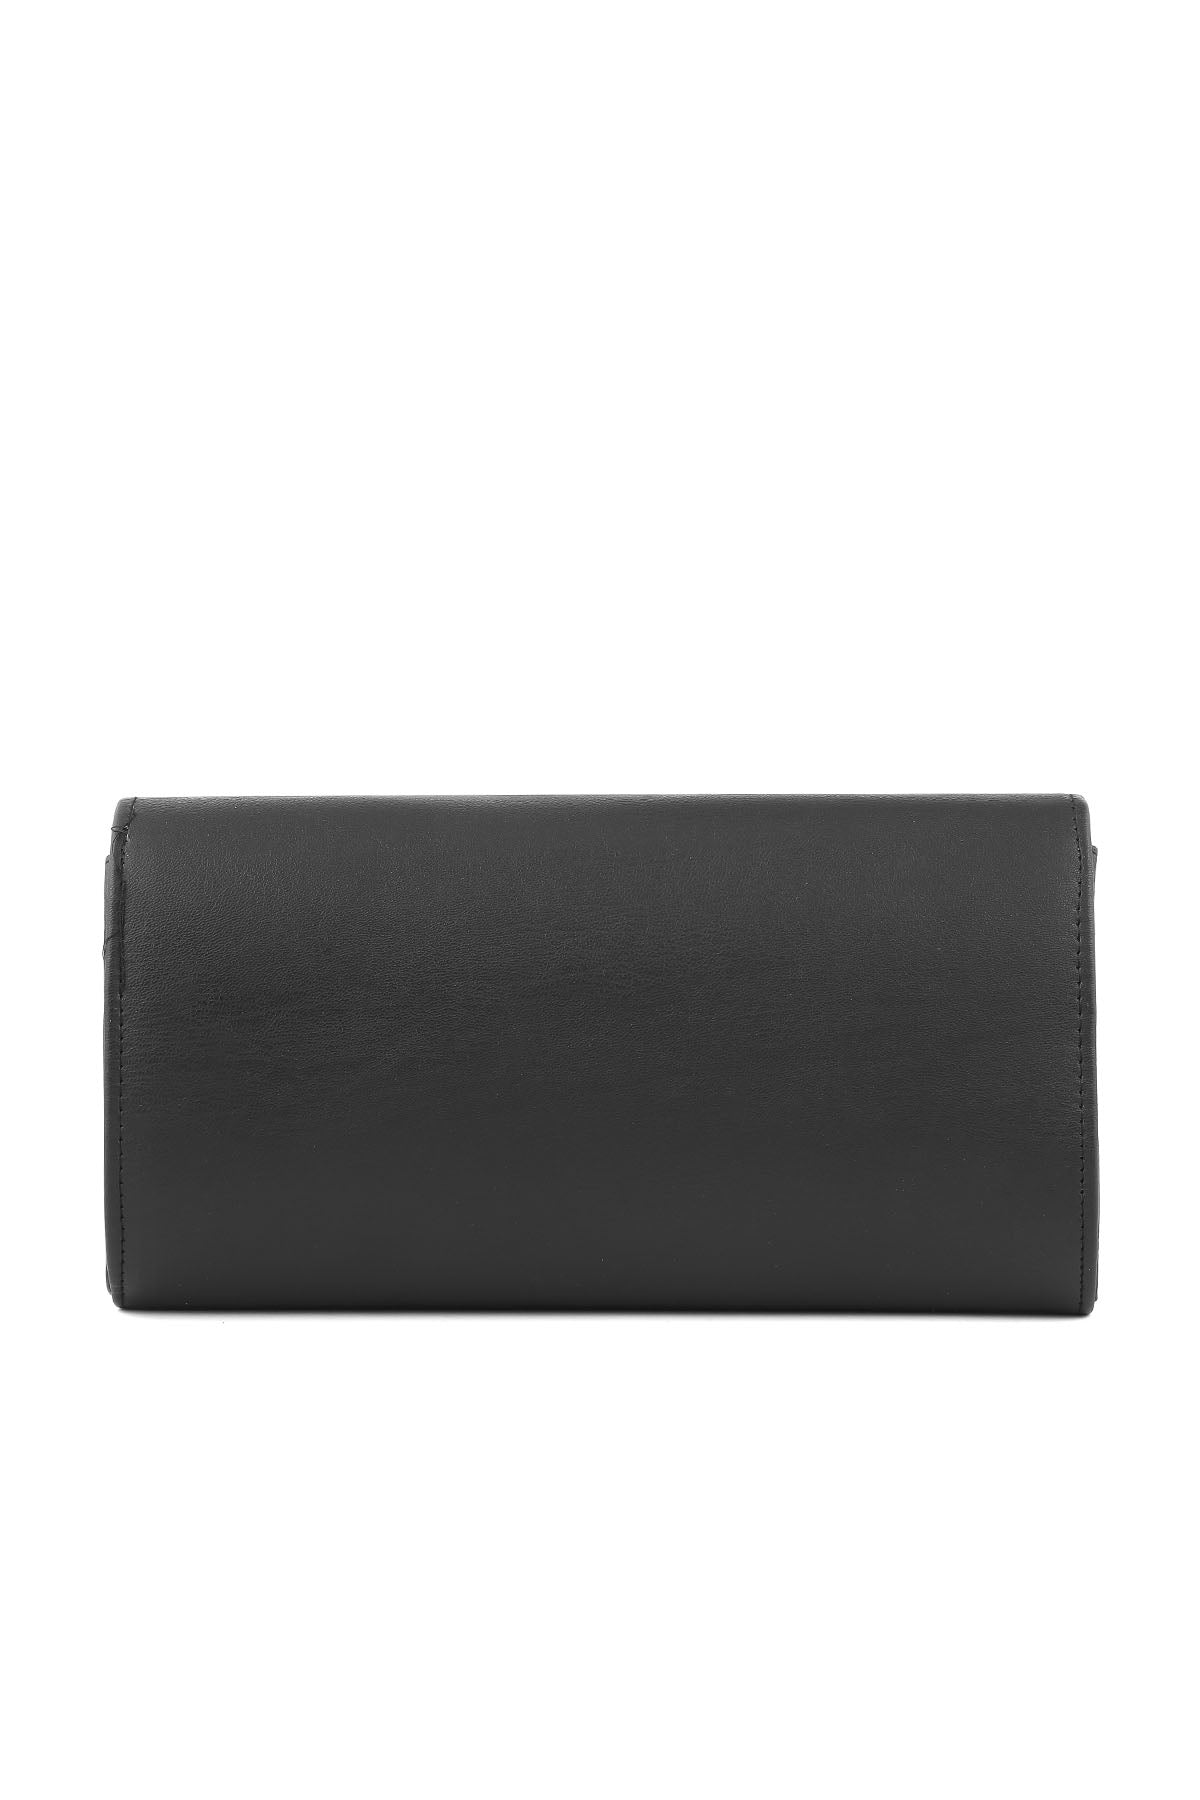 Flap Shoulder Bags B21585-Black